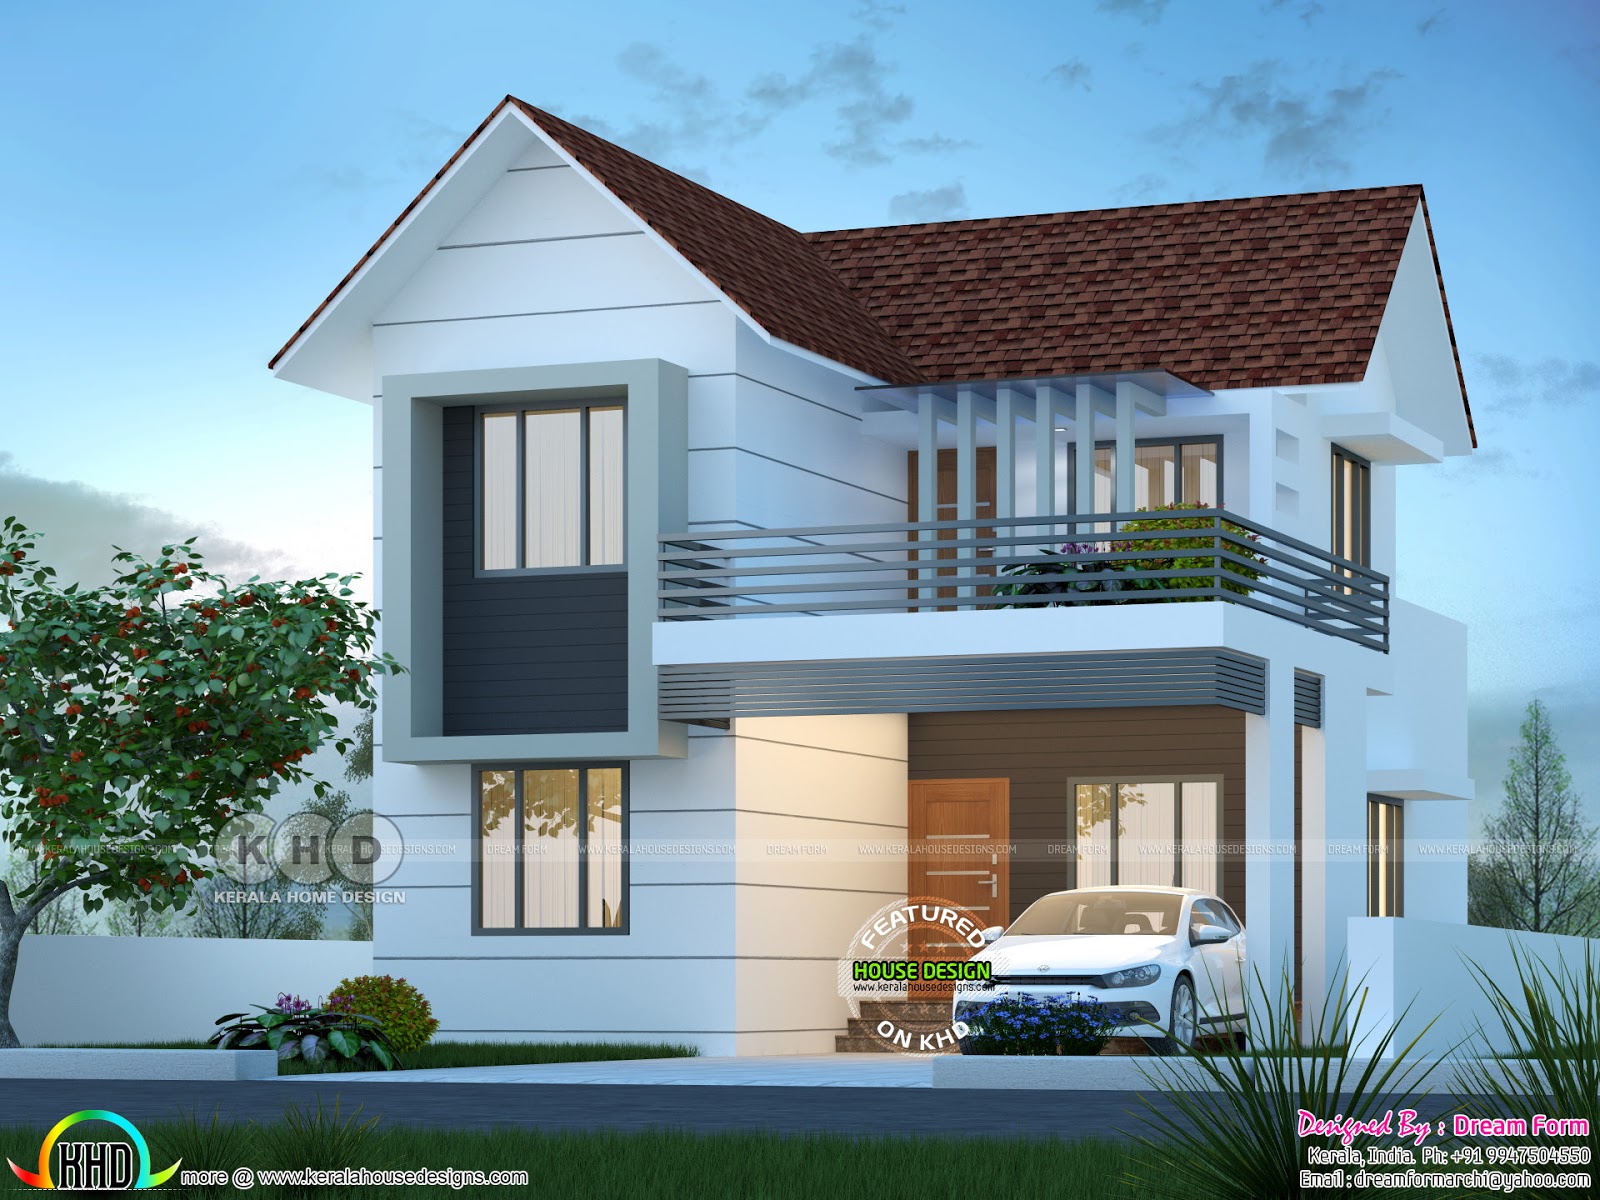 3 bedroom 1650 sq ft Modern home design Kerala home 